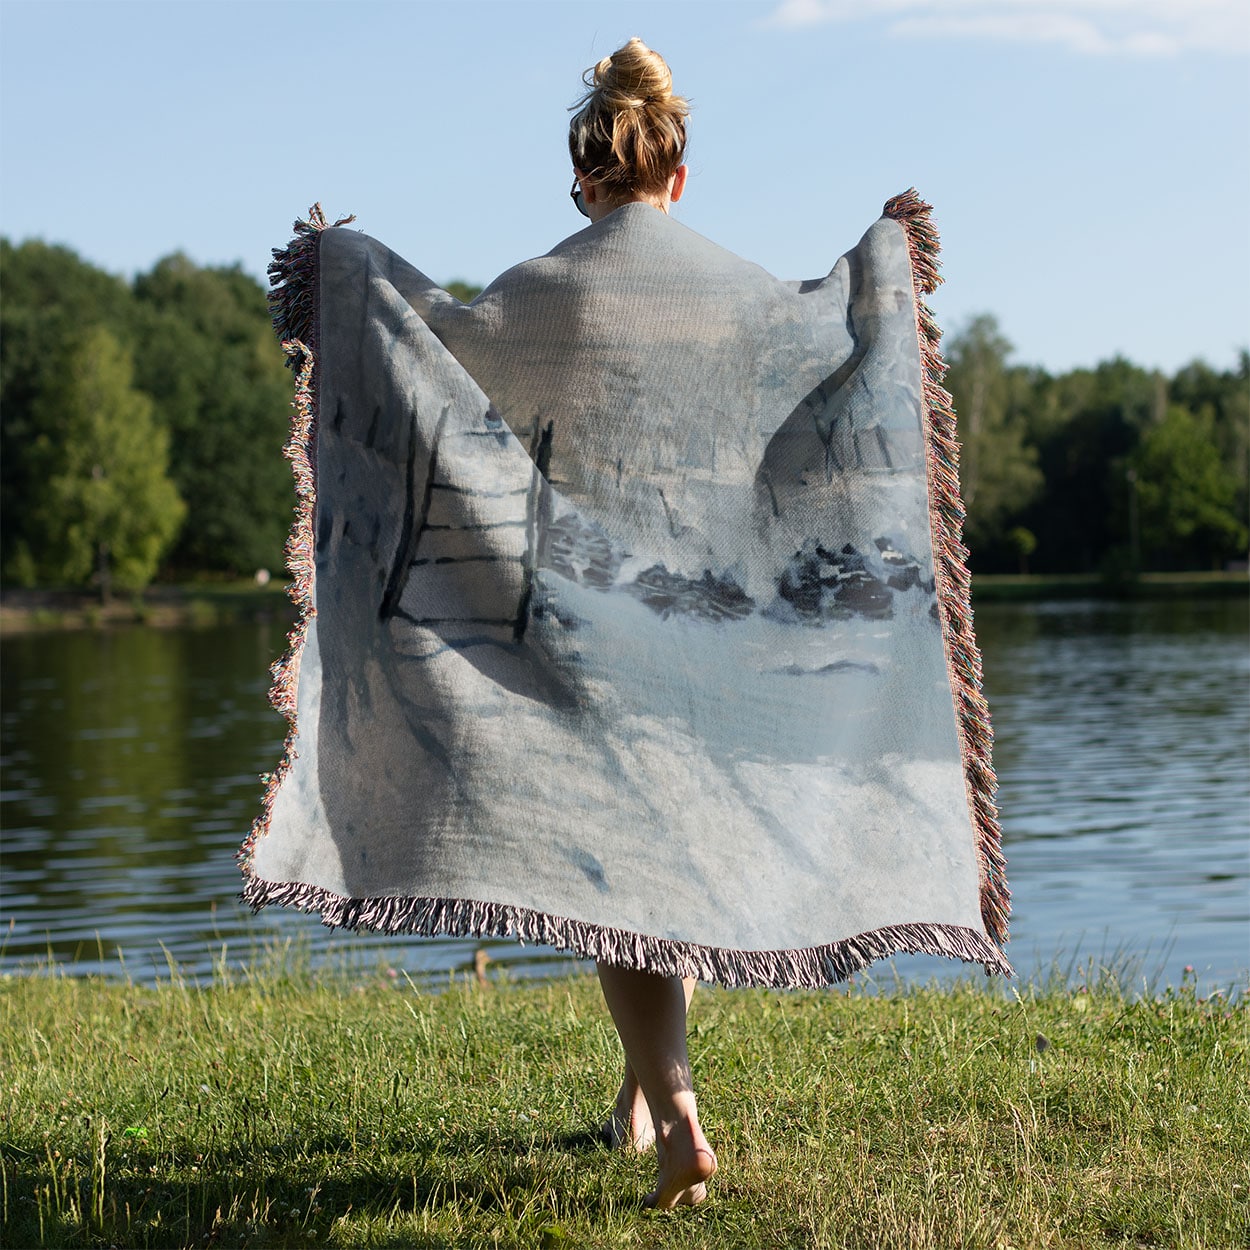 Winter Woven Blanket Held on a Woman's Back Outside